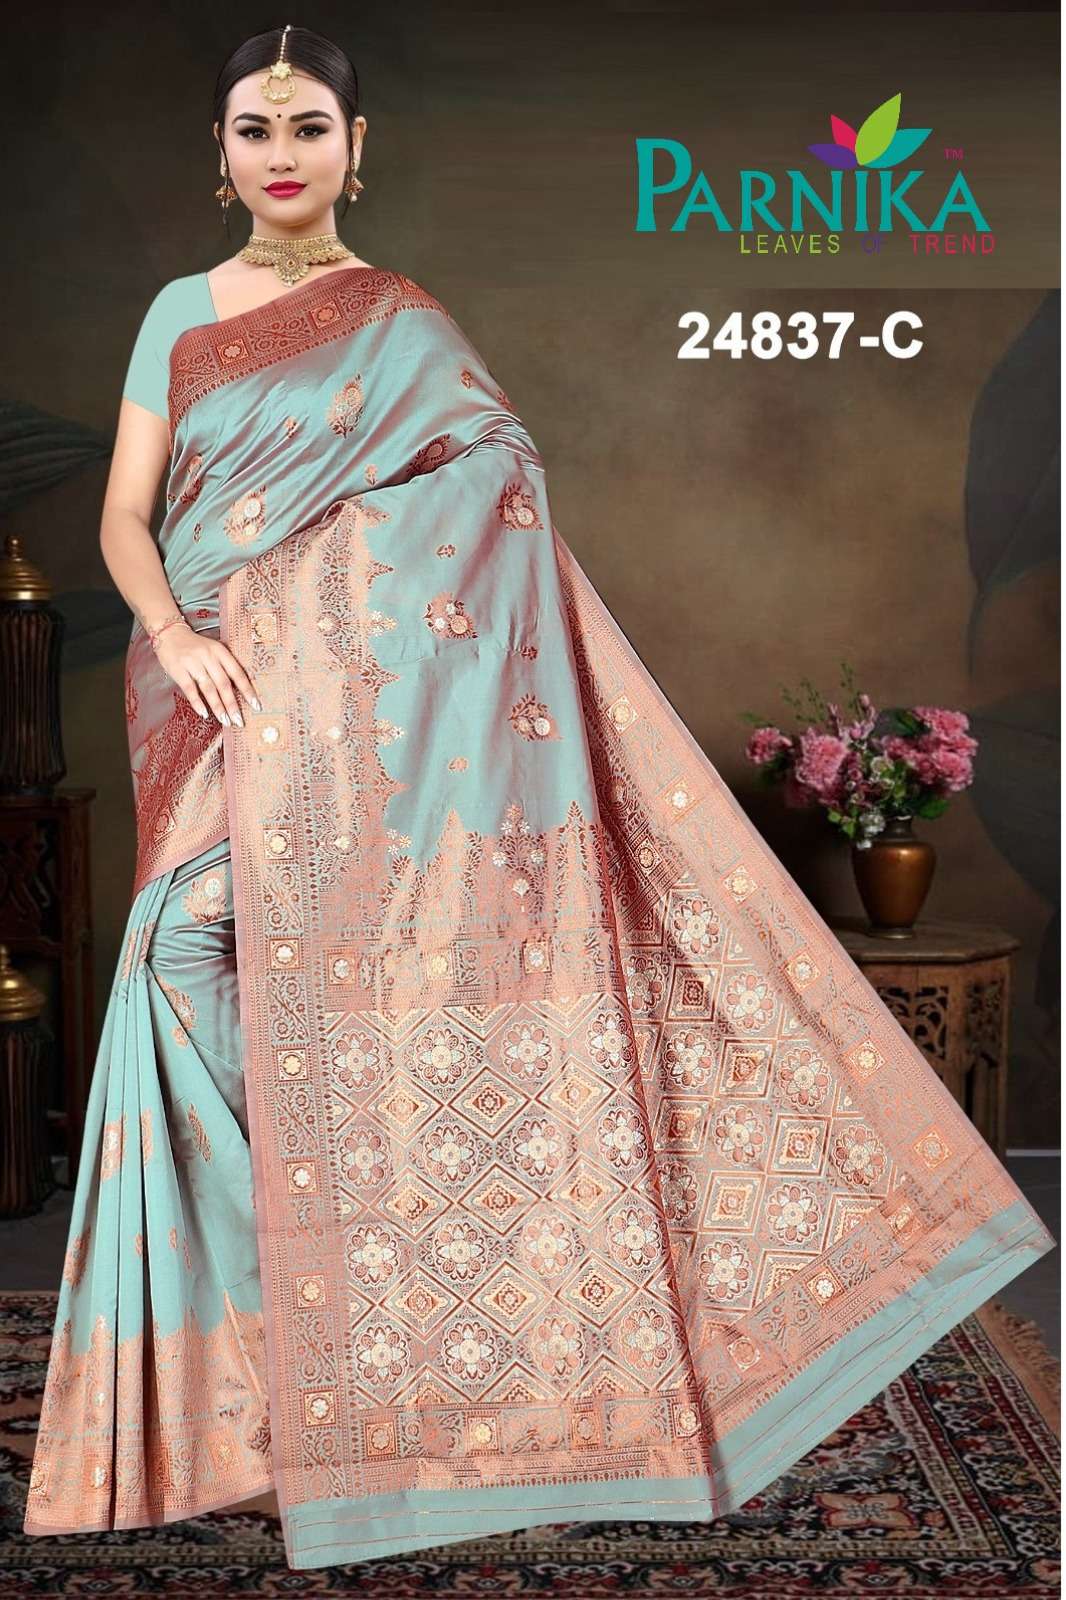 Parnika India Lichi Silk Jacquard Sarees Festive Wear Wedding Saree in Wholesale rate - 24837